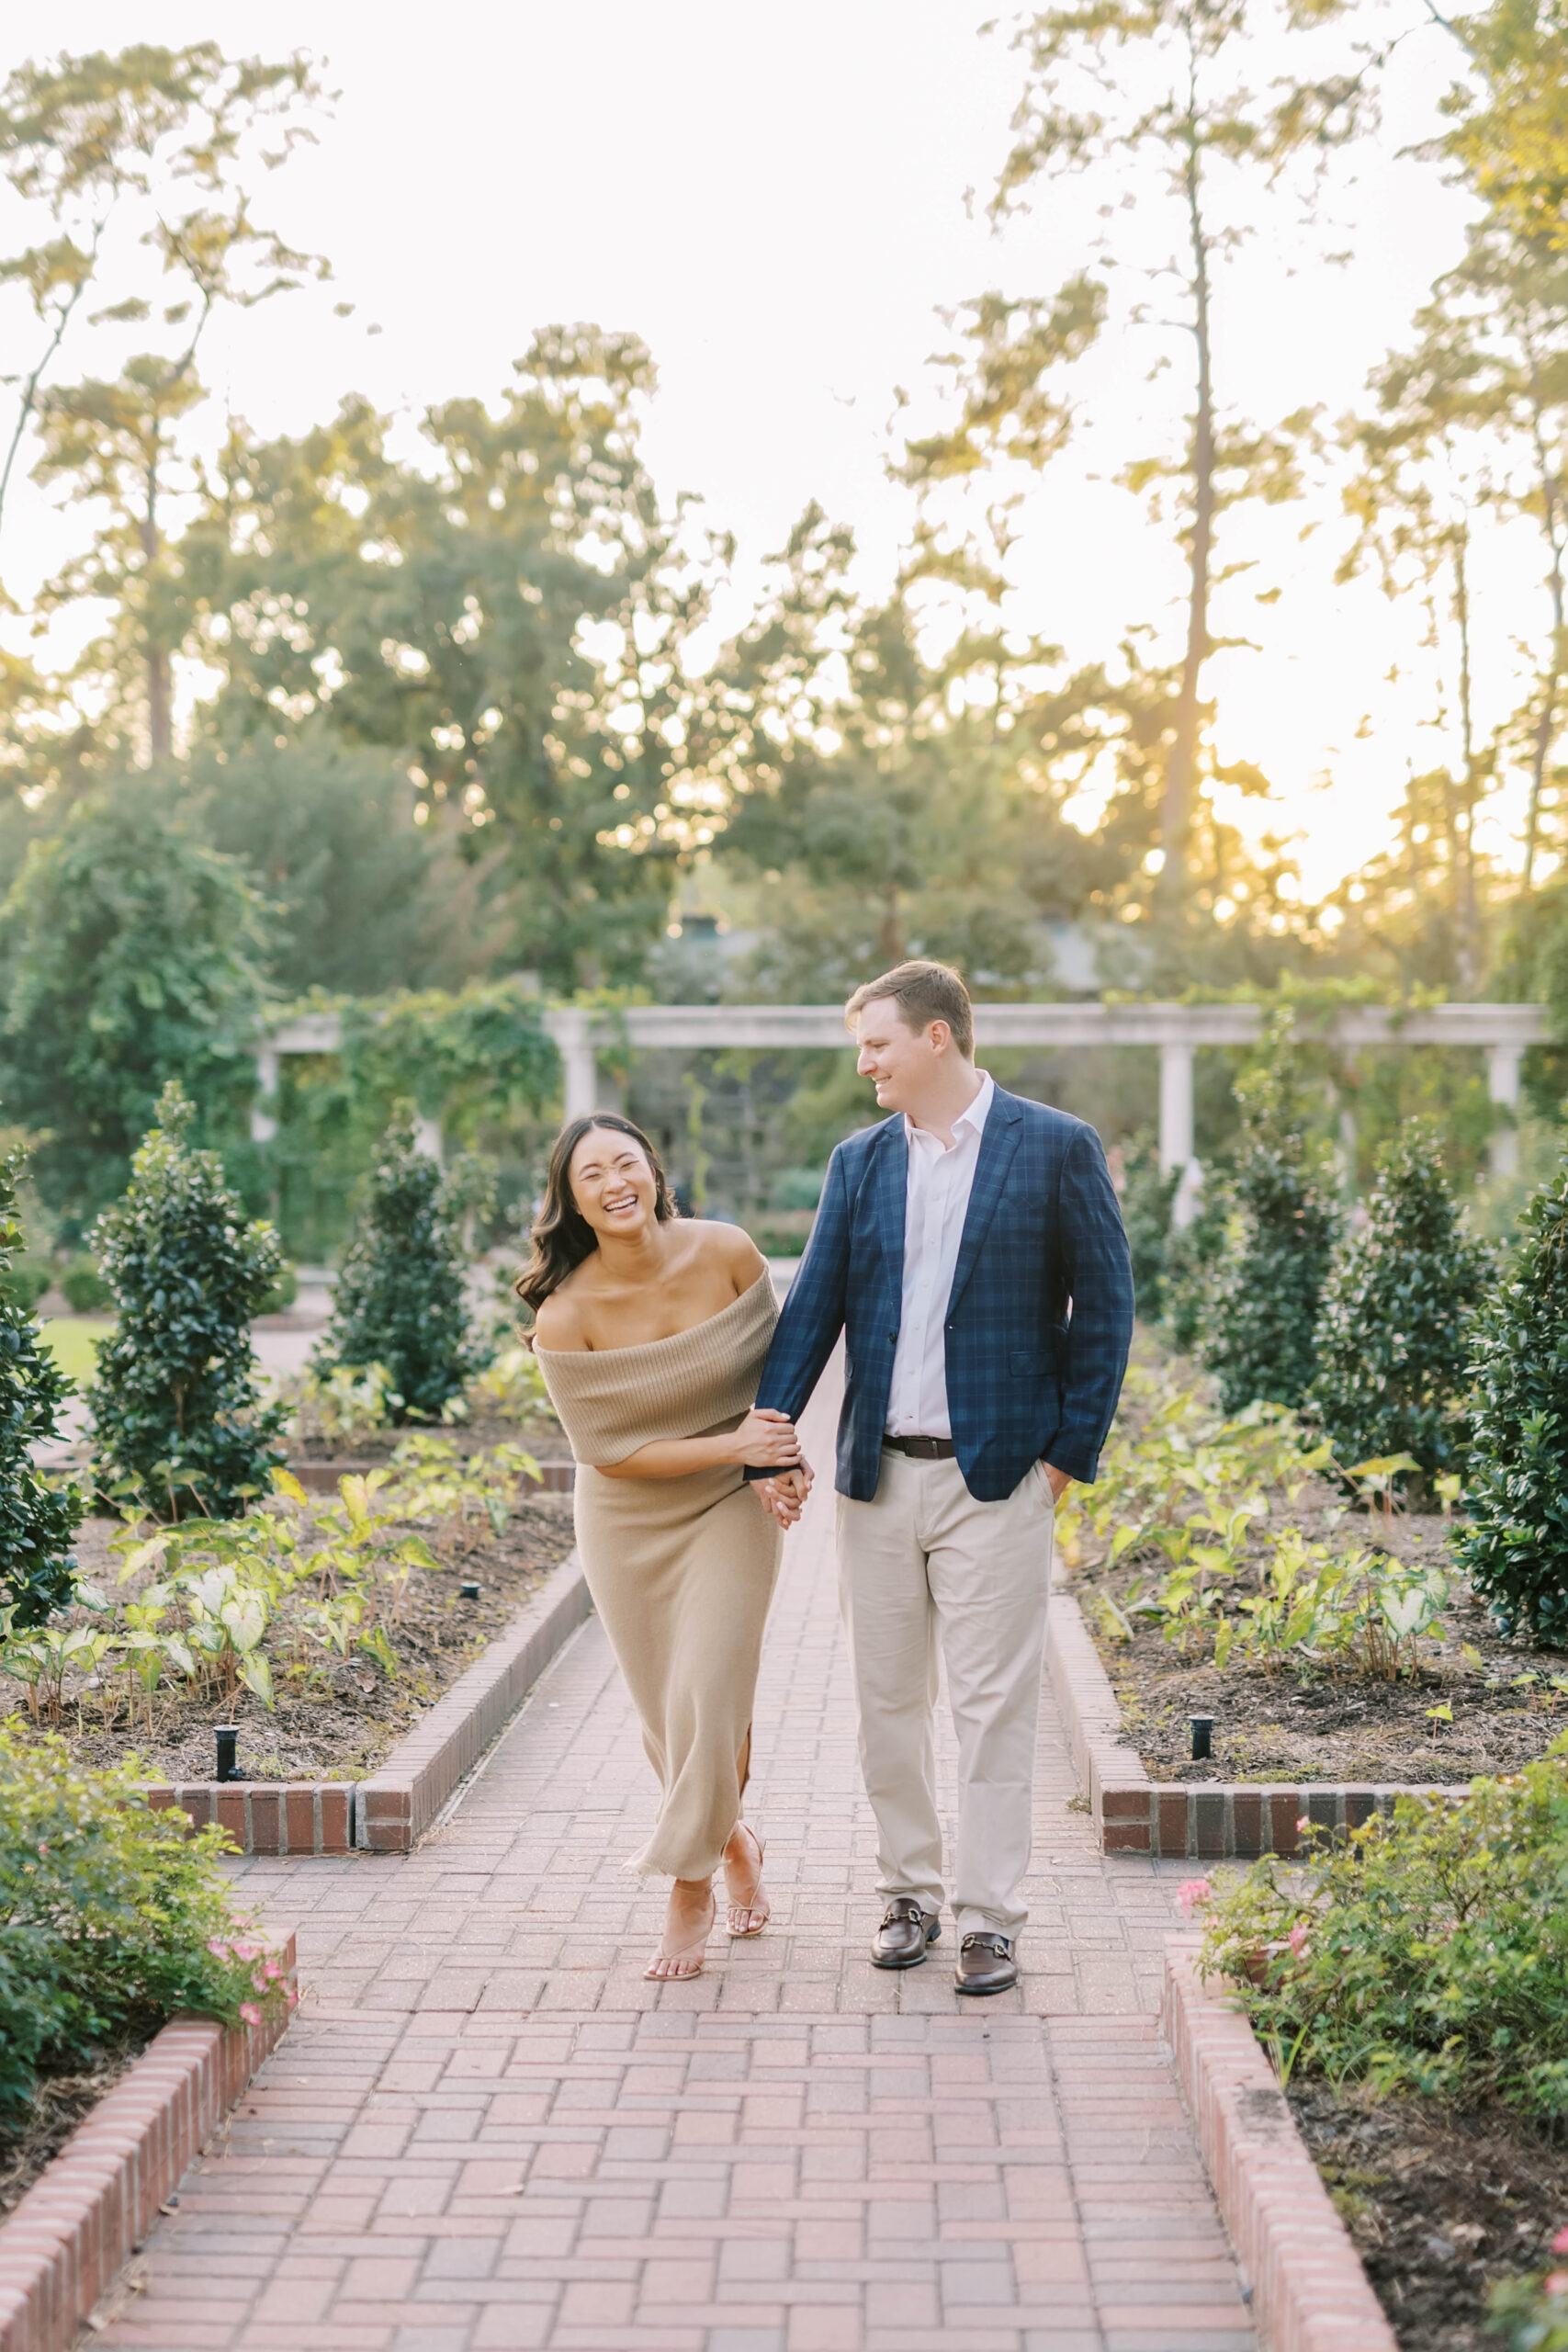 Couples Houston engagement pictures at Mercer Arboretum and Botanic Gardens